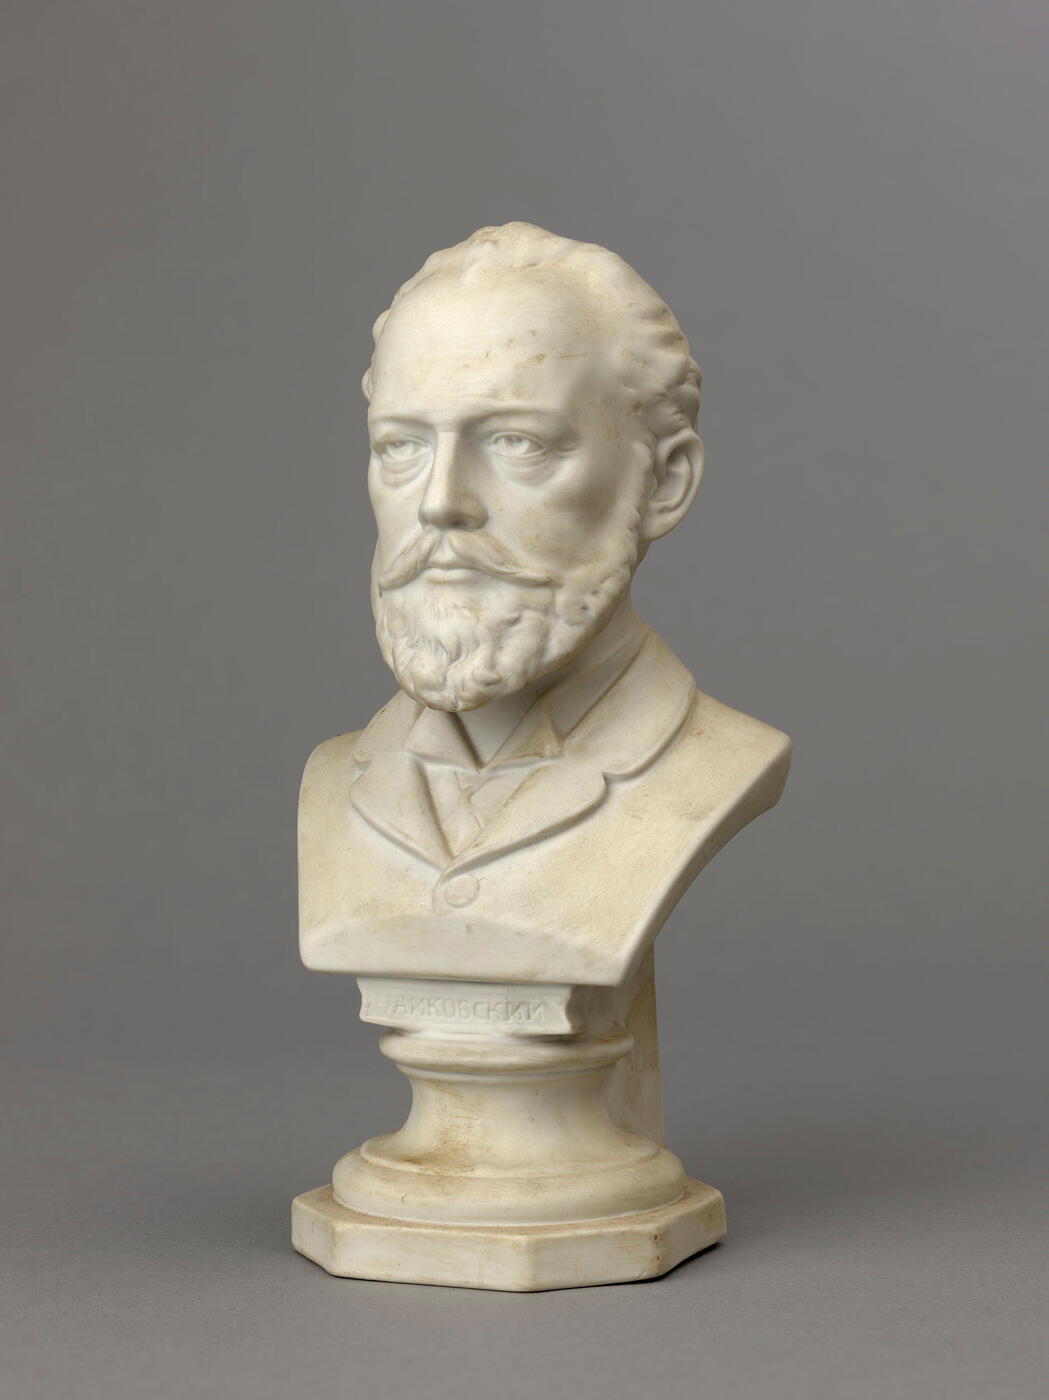 Portrait of Pyotr Tchaikovsky